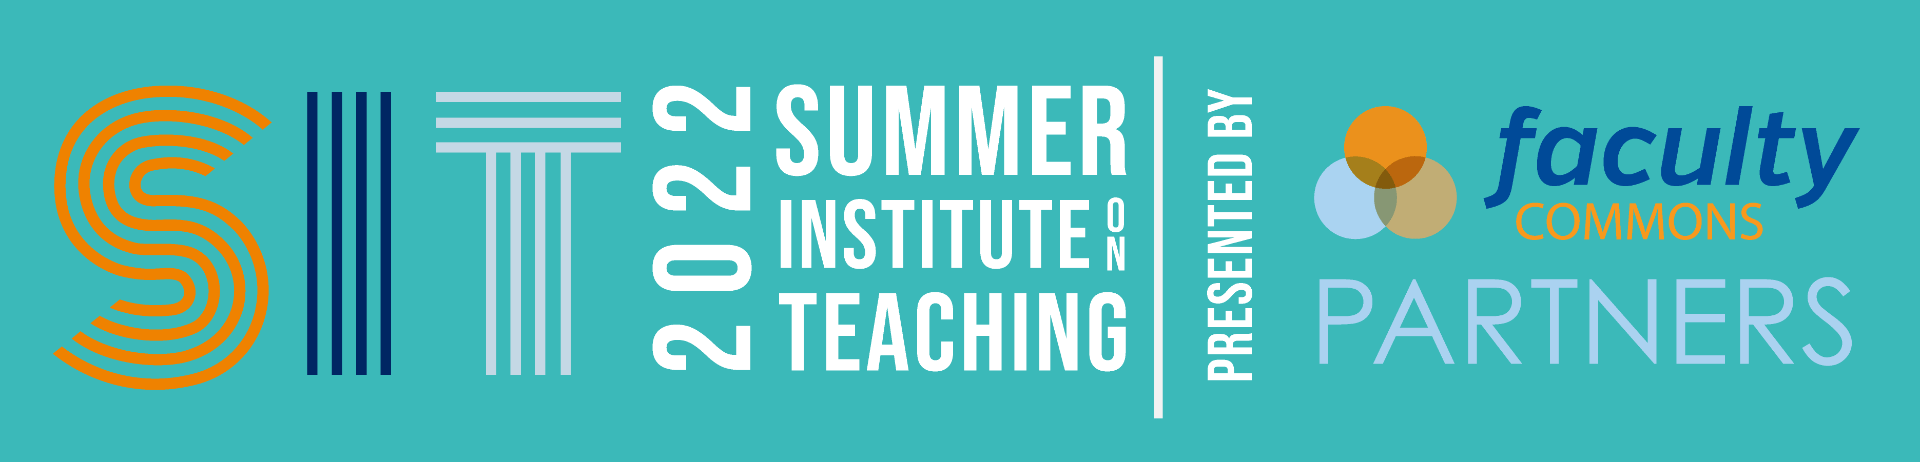 Summer Institute on Teaching